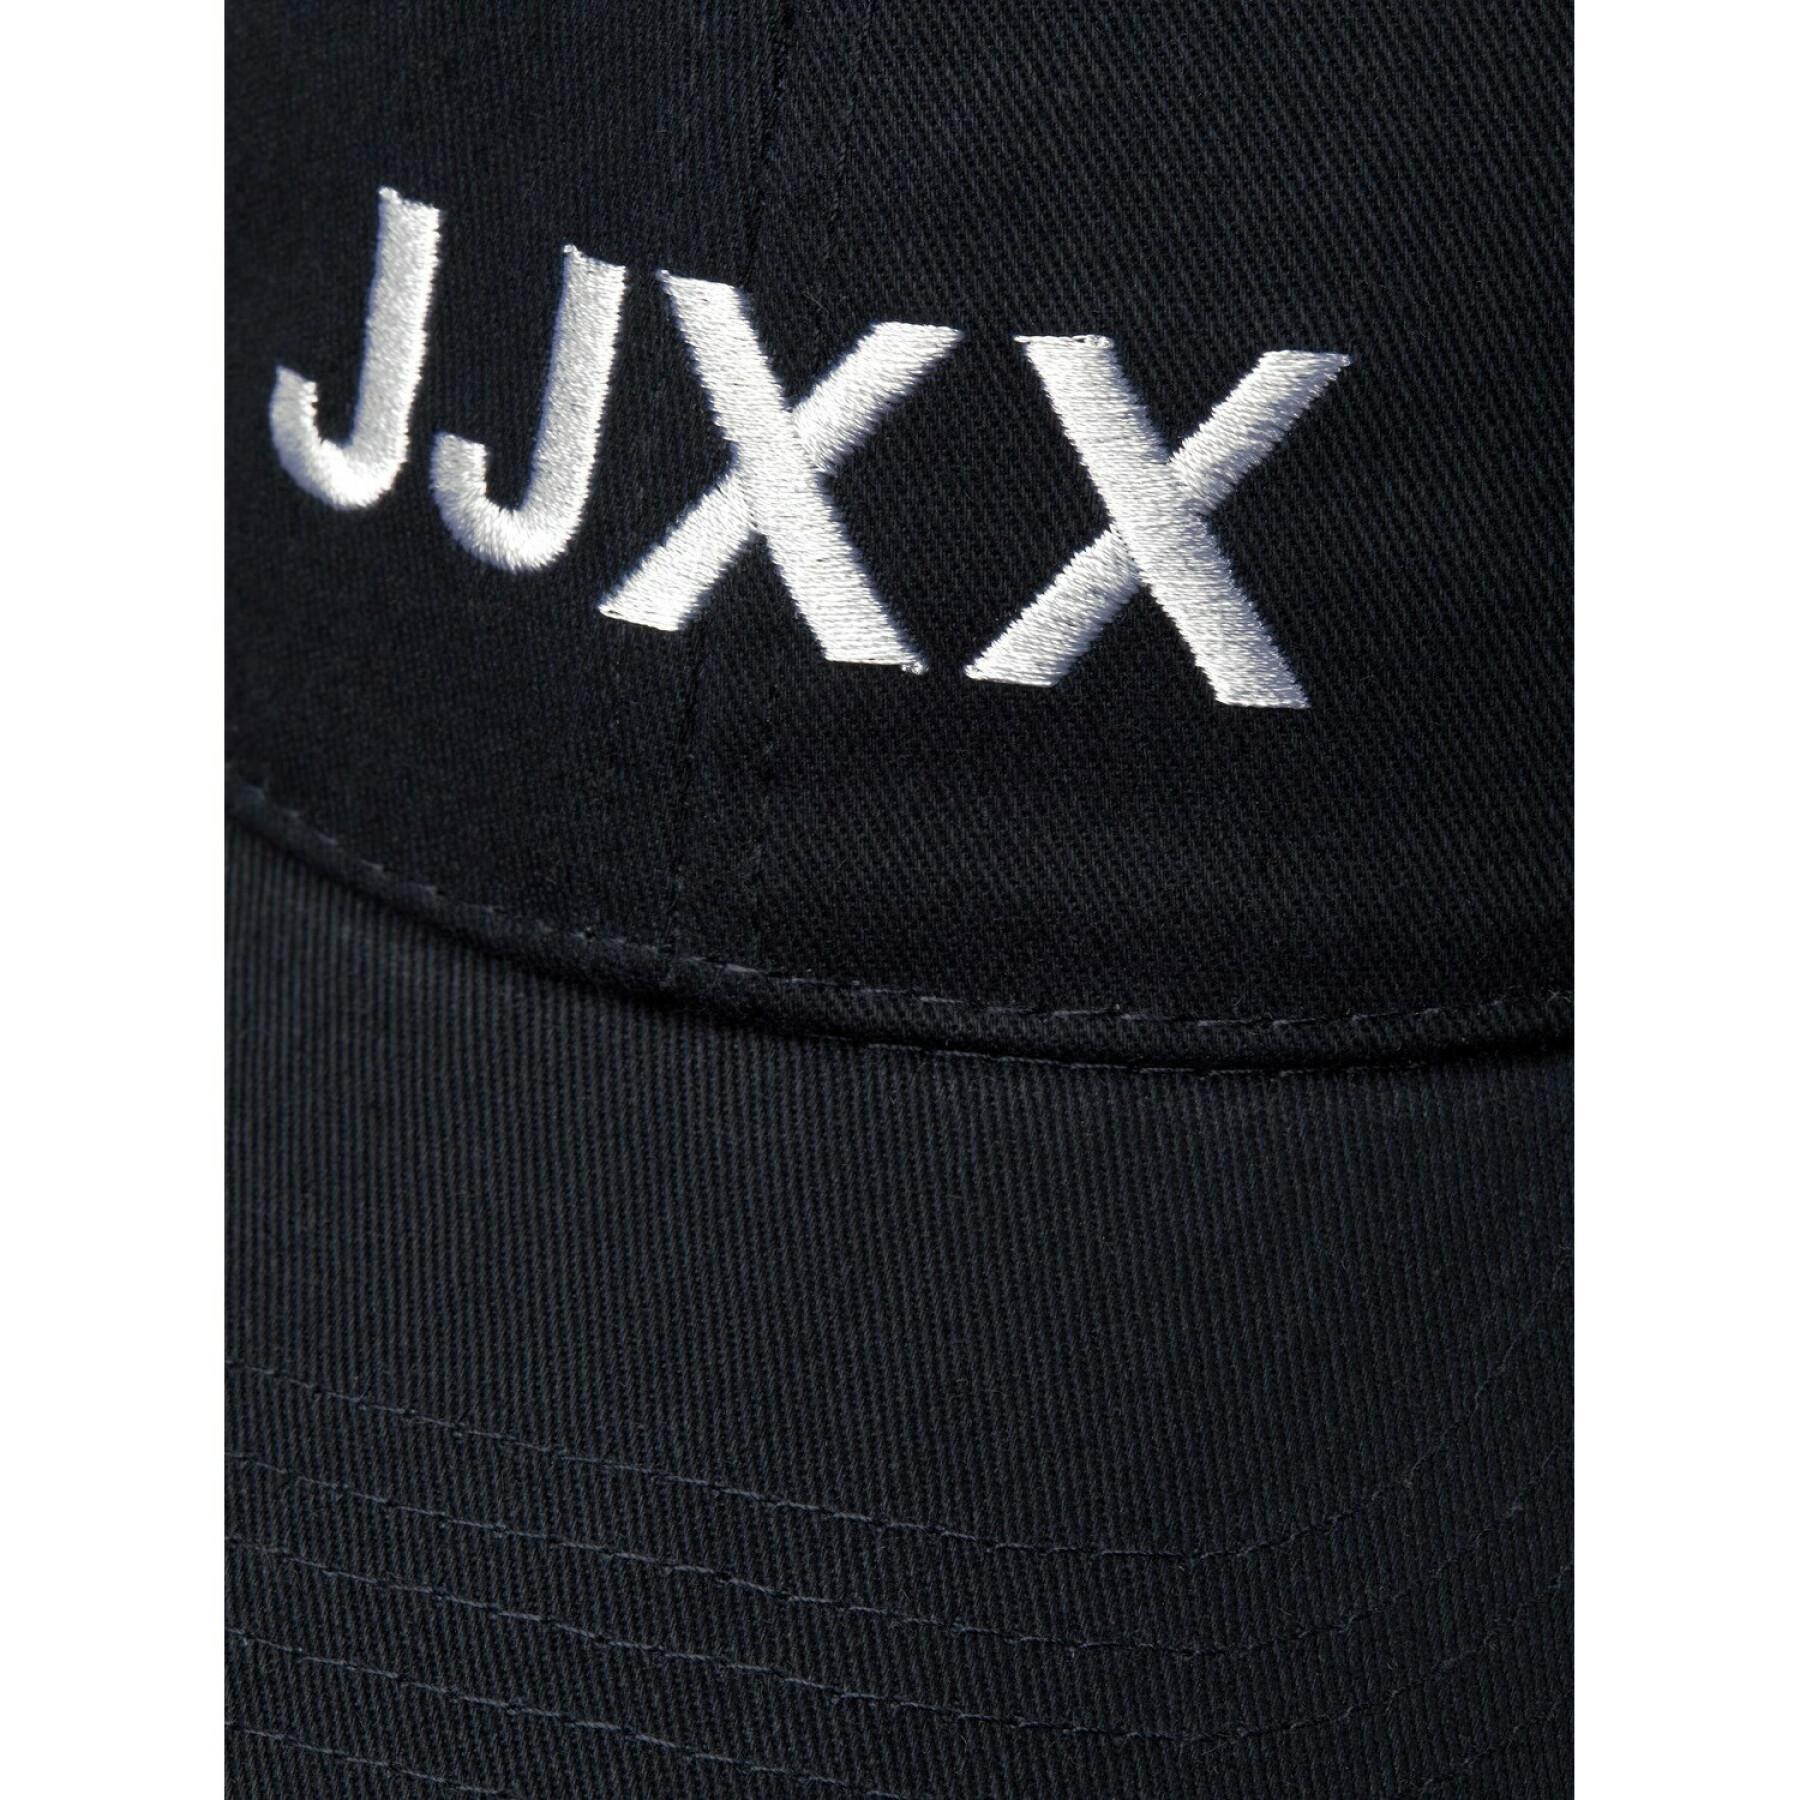 Damespet JJXX basic big logo